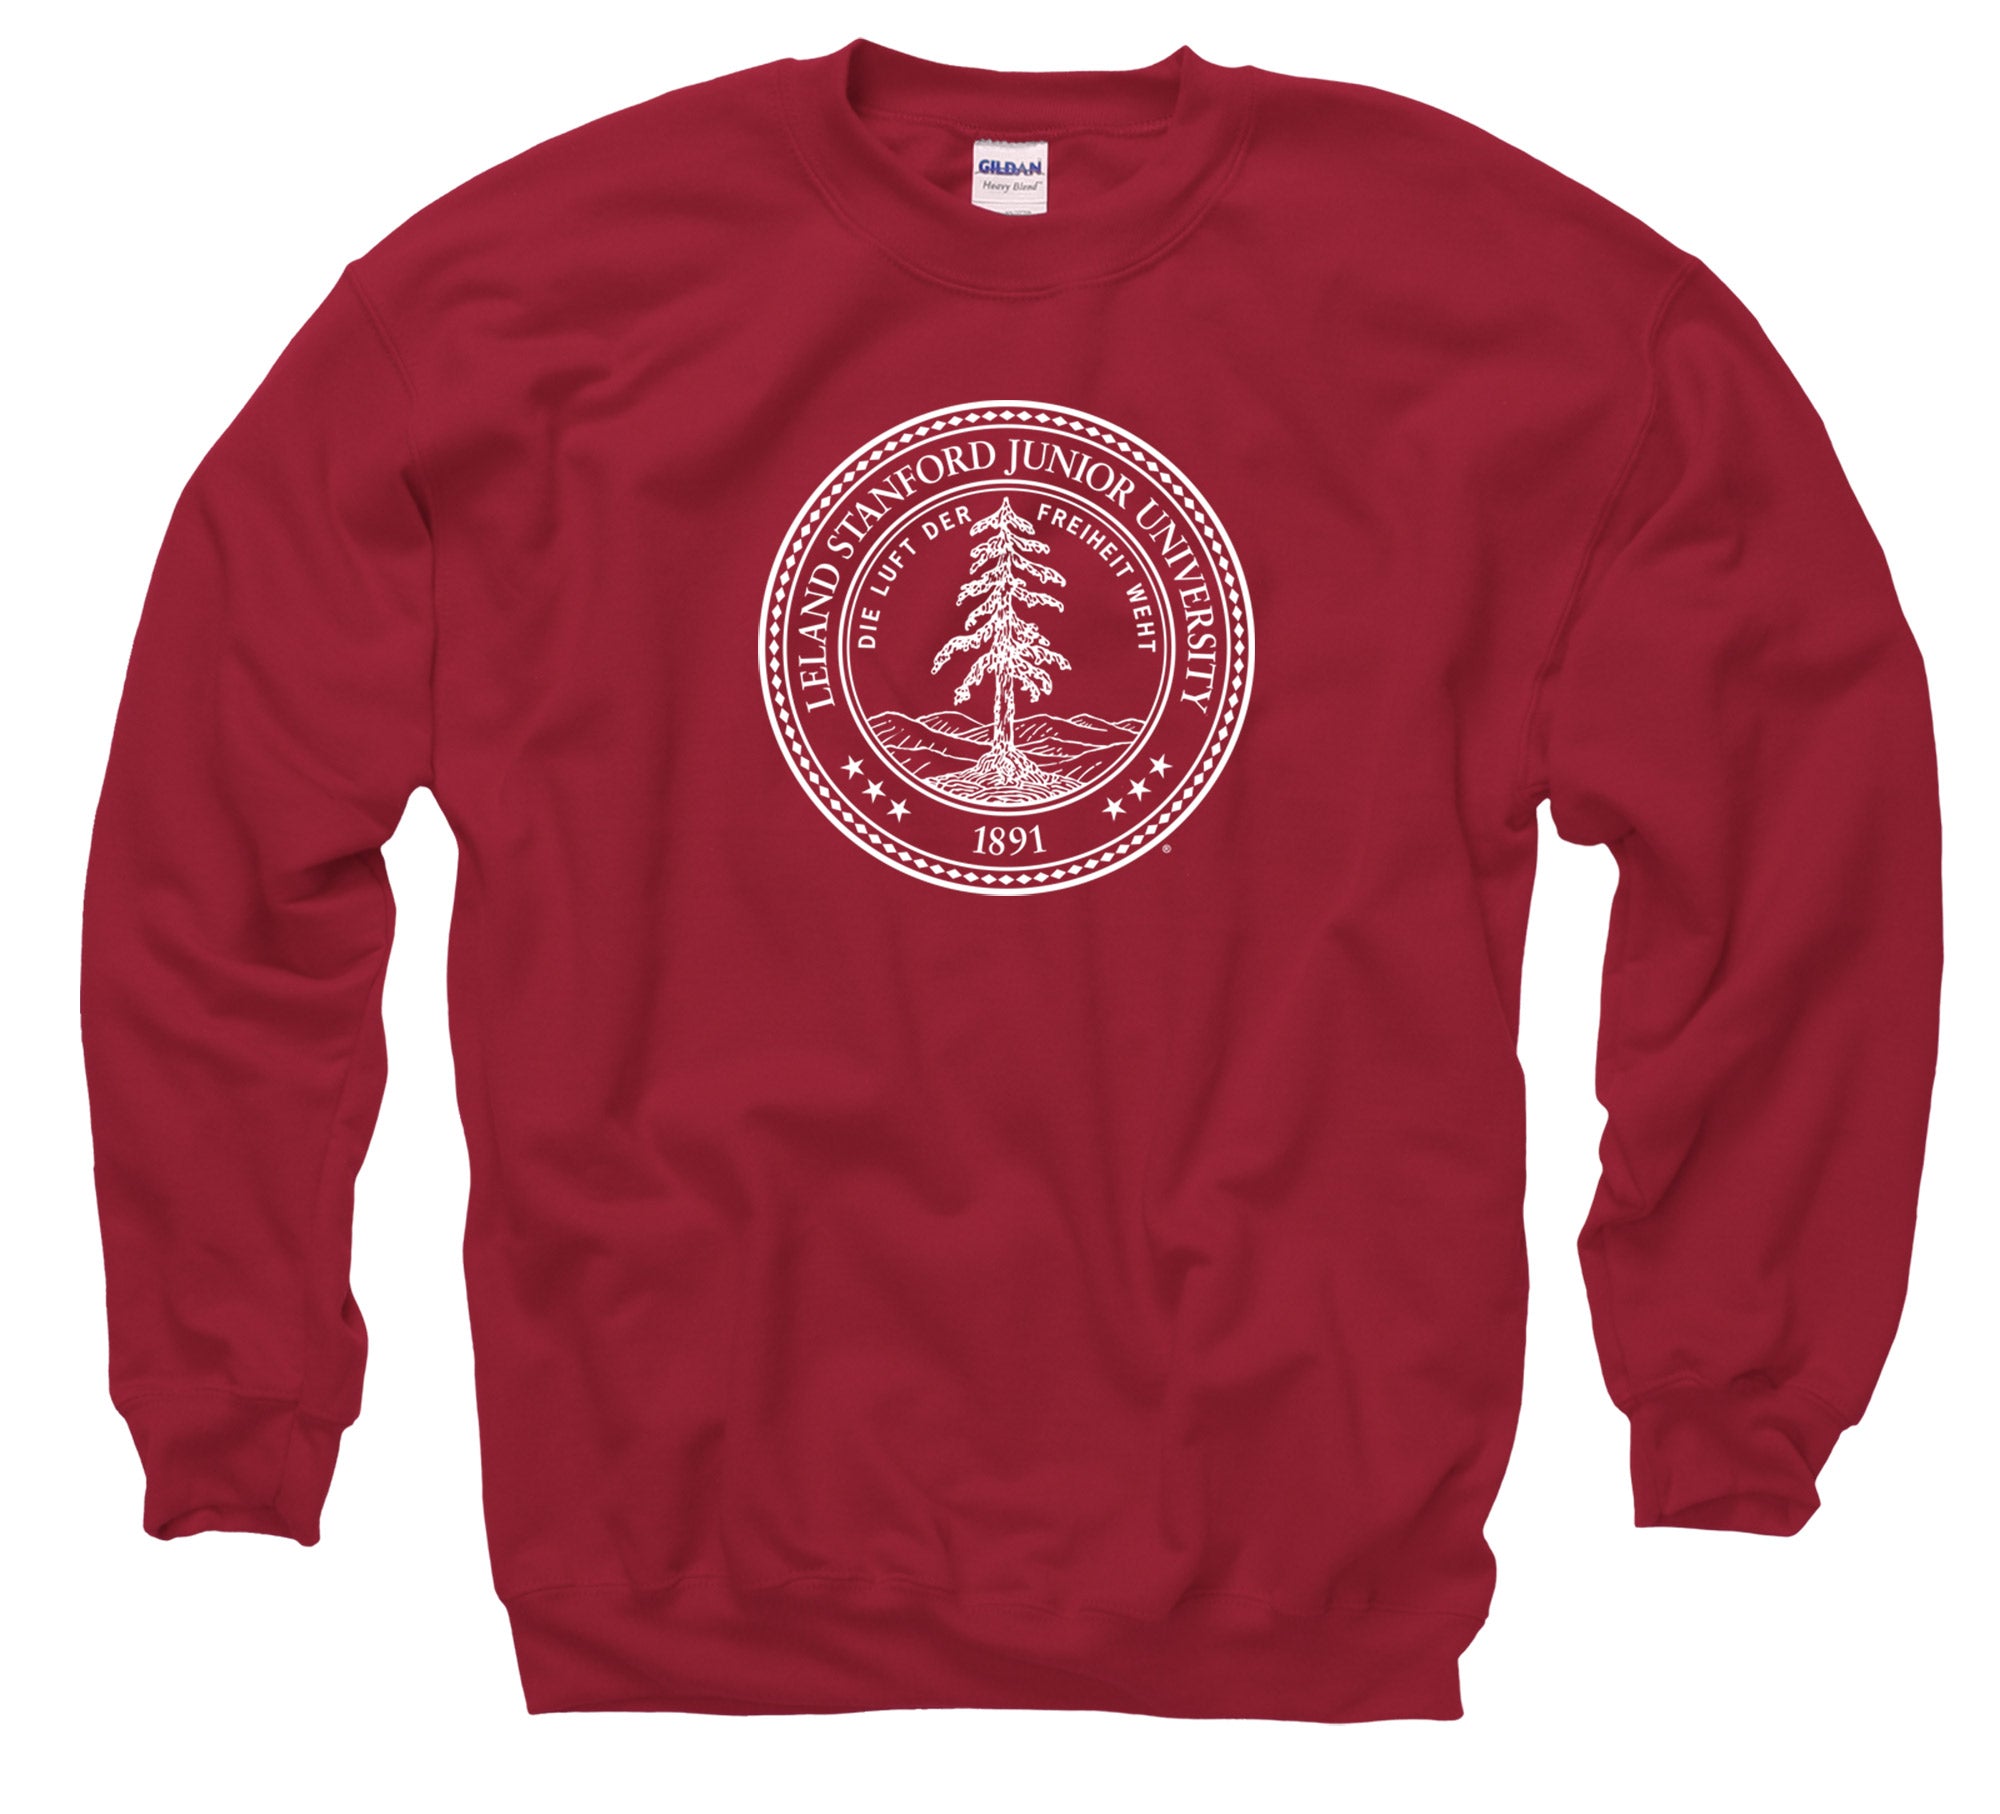 Stanford Classic Crewneck Sweatshirt – Hillflint